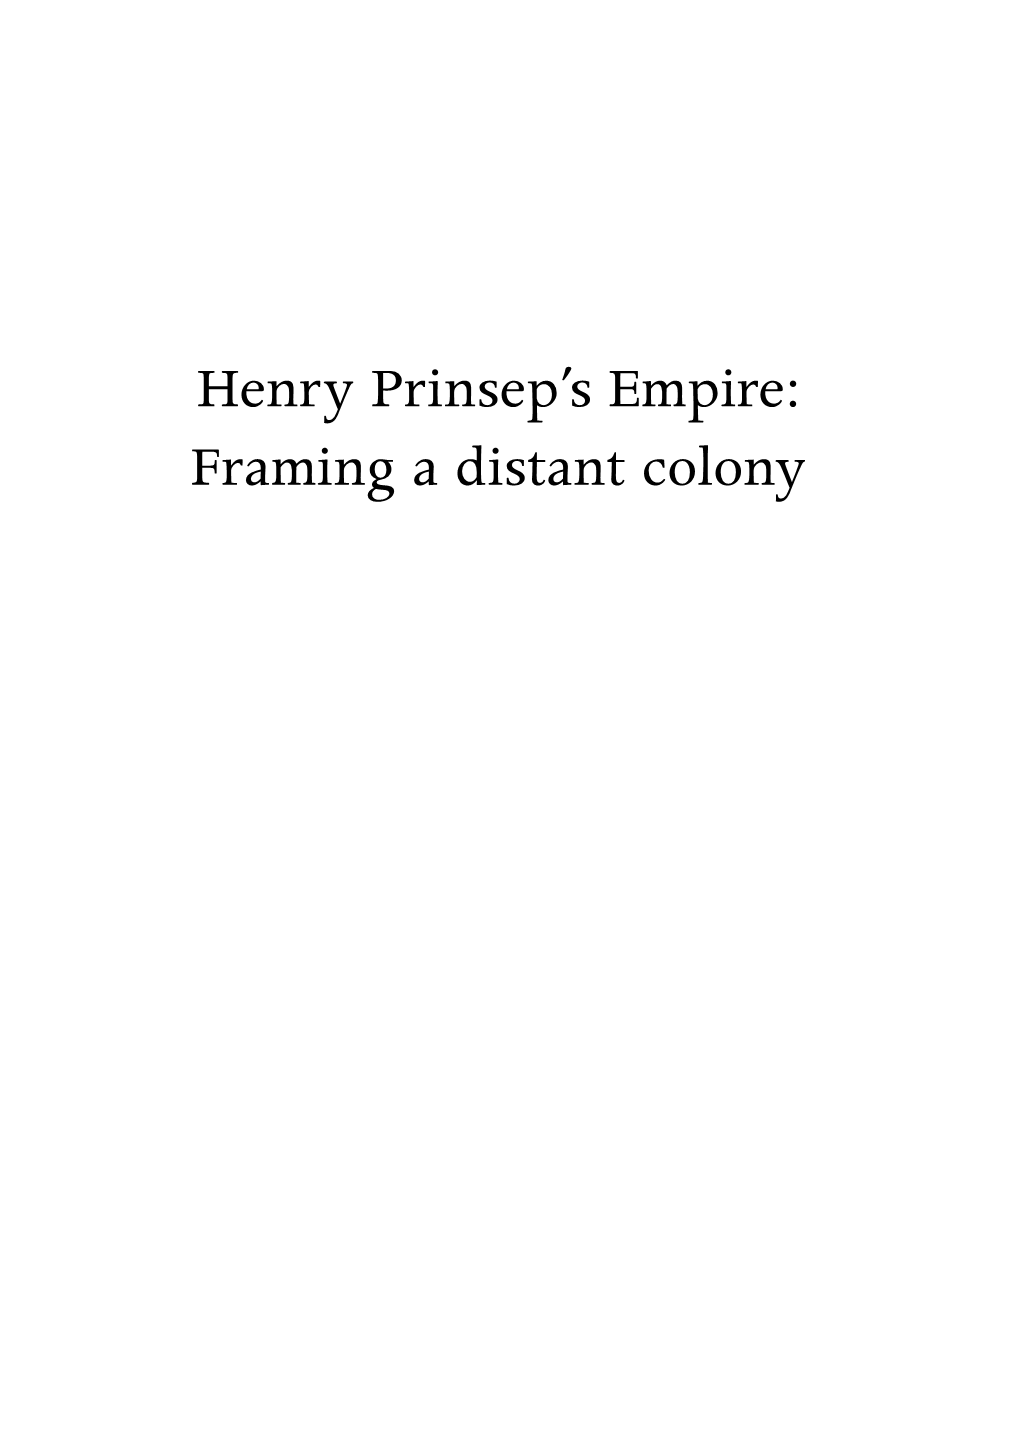 Henry Prinsep's Empire: Framing a Distant Colony